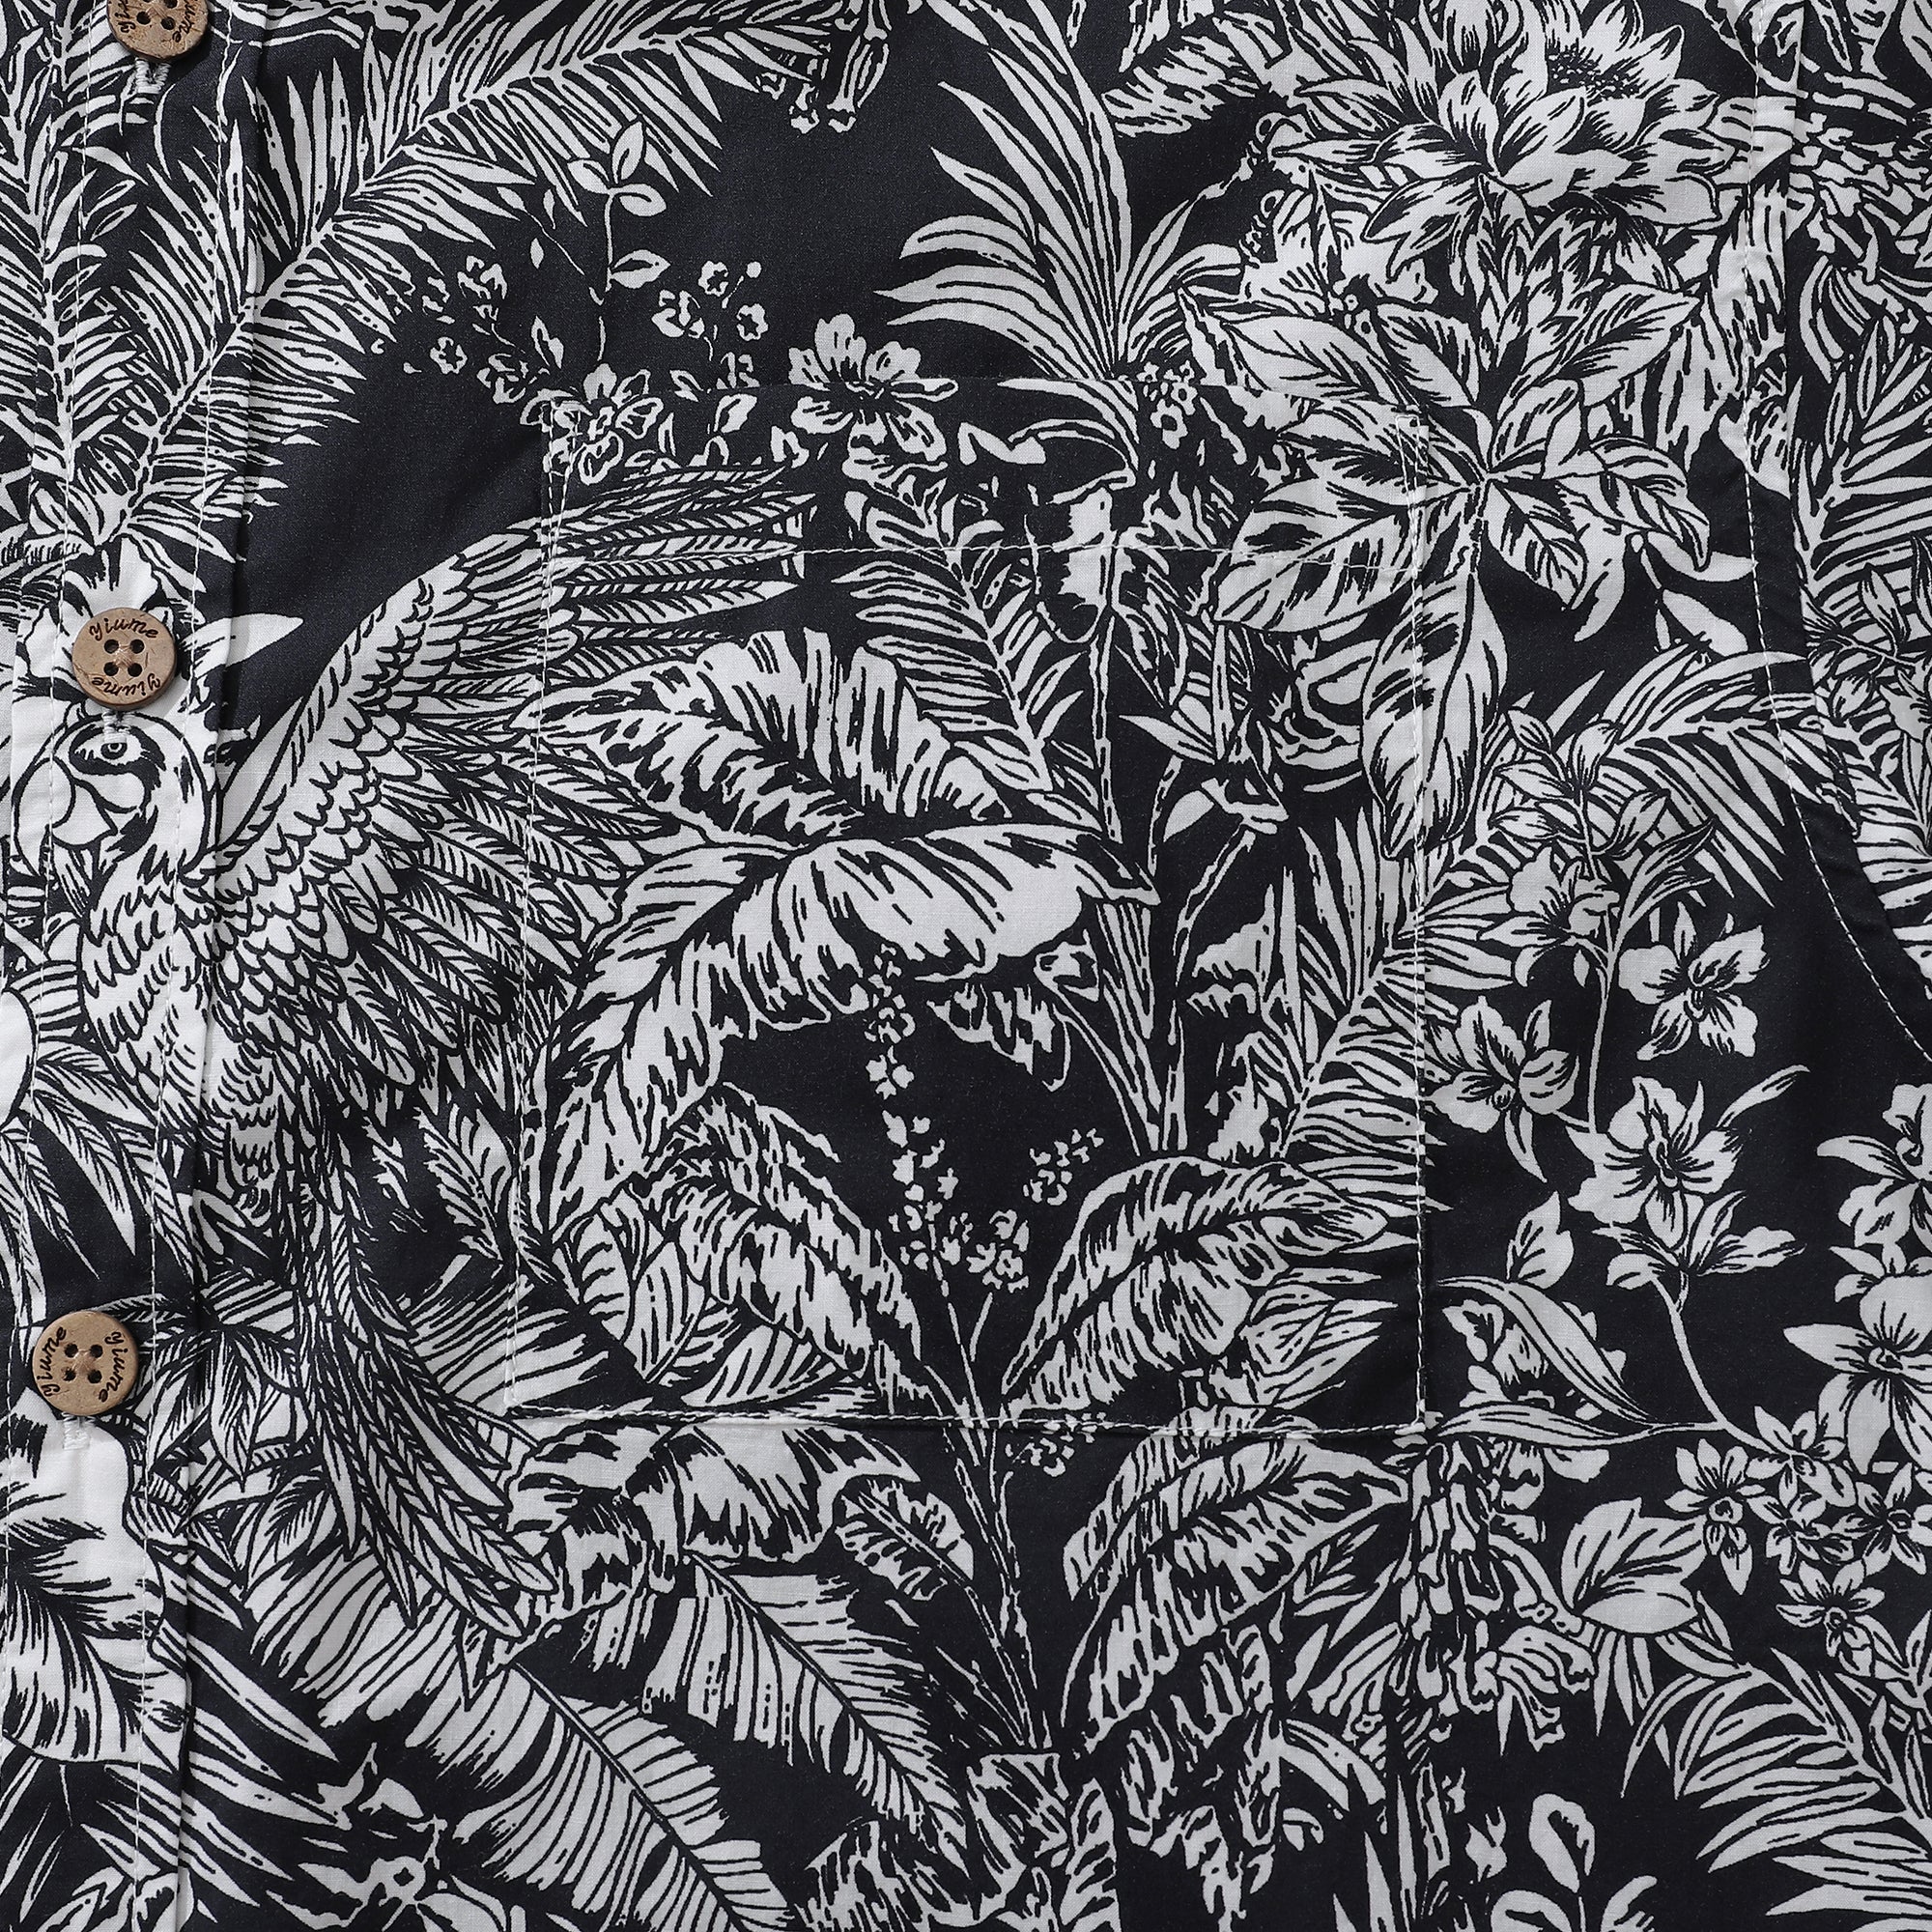 Men's Hawaiian Shirt Black Parrot In The Jungle 100% Cotton Button Down